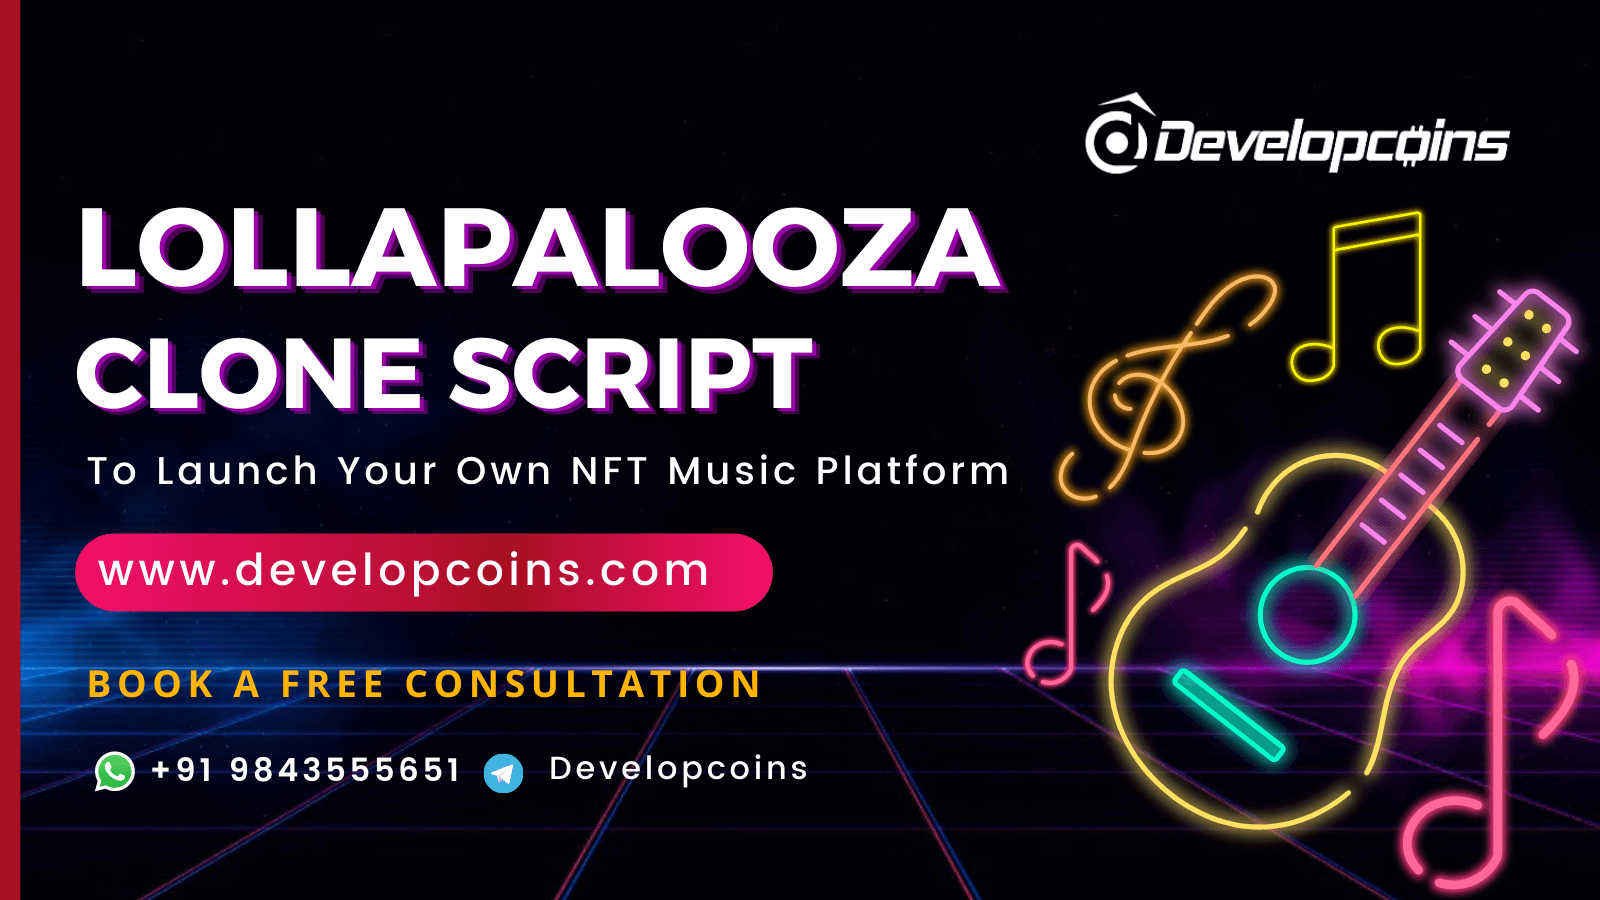 Launch Your Own NFT Music Marketplace Like Lollapalooza On Solana Blockchain